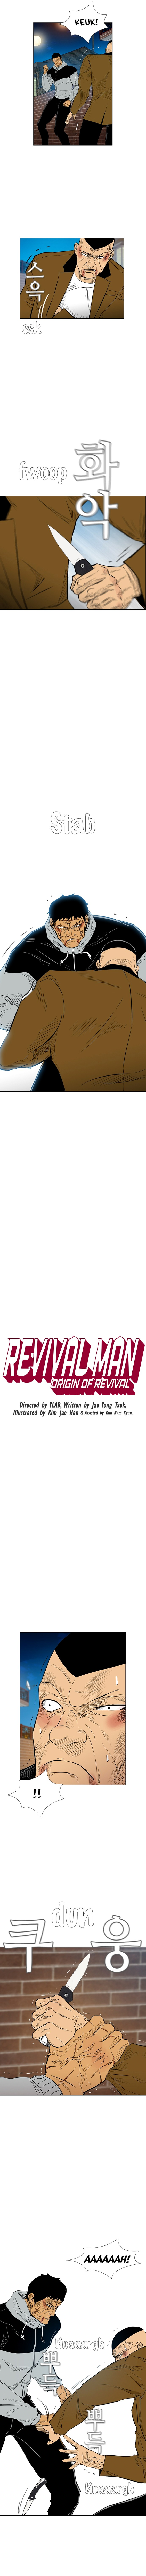 Revival Man image